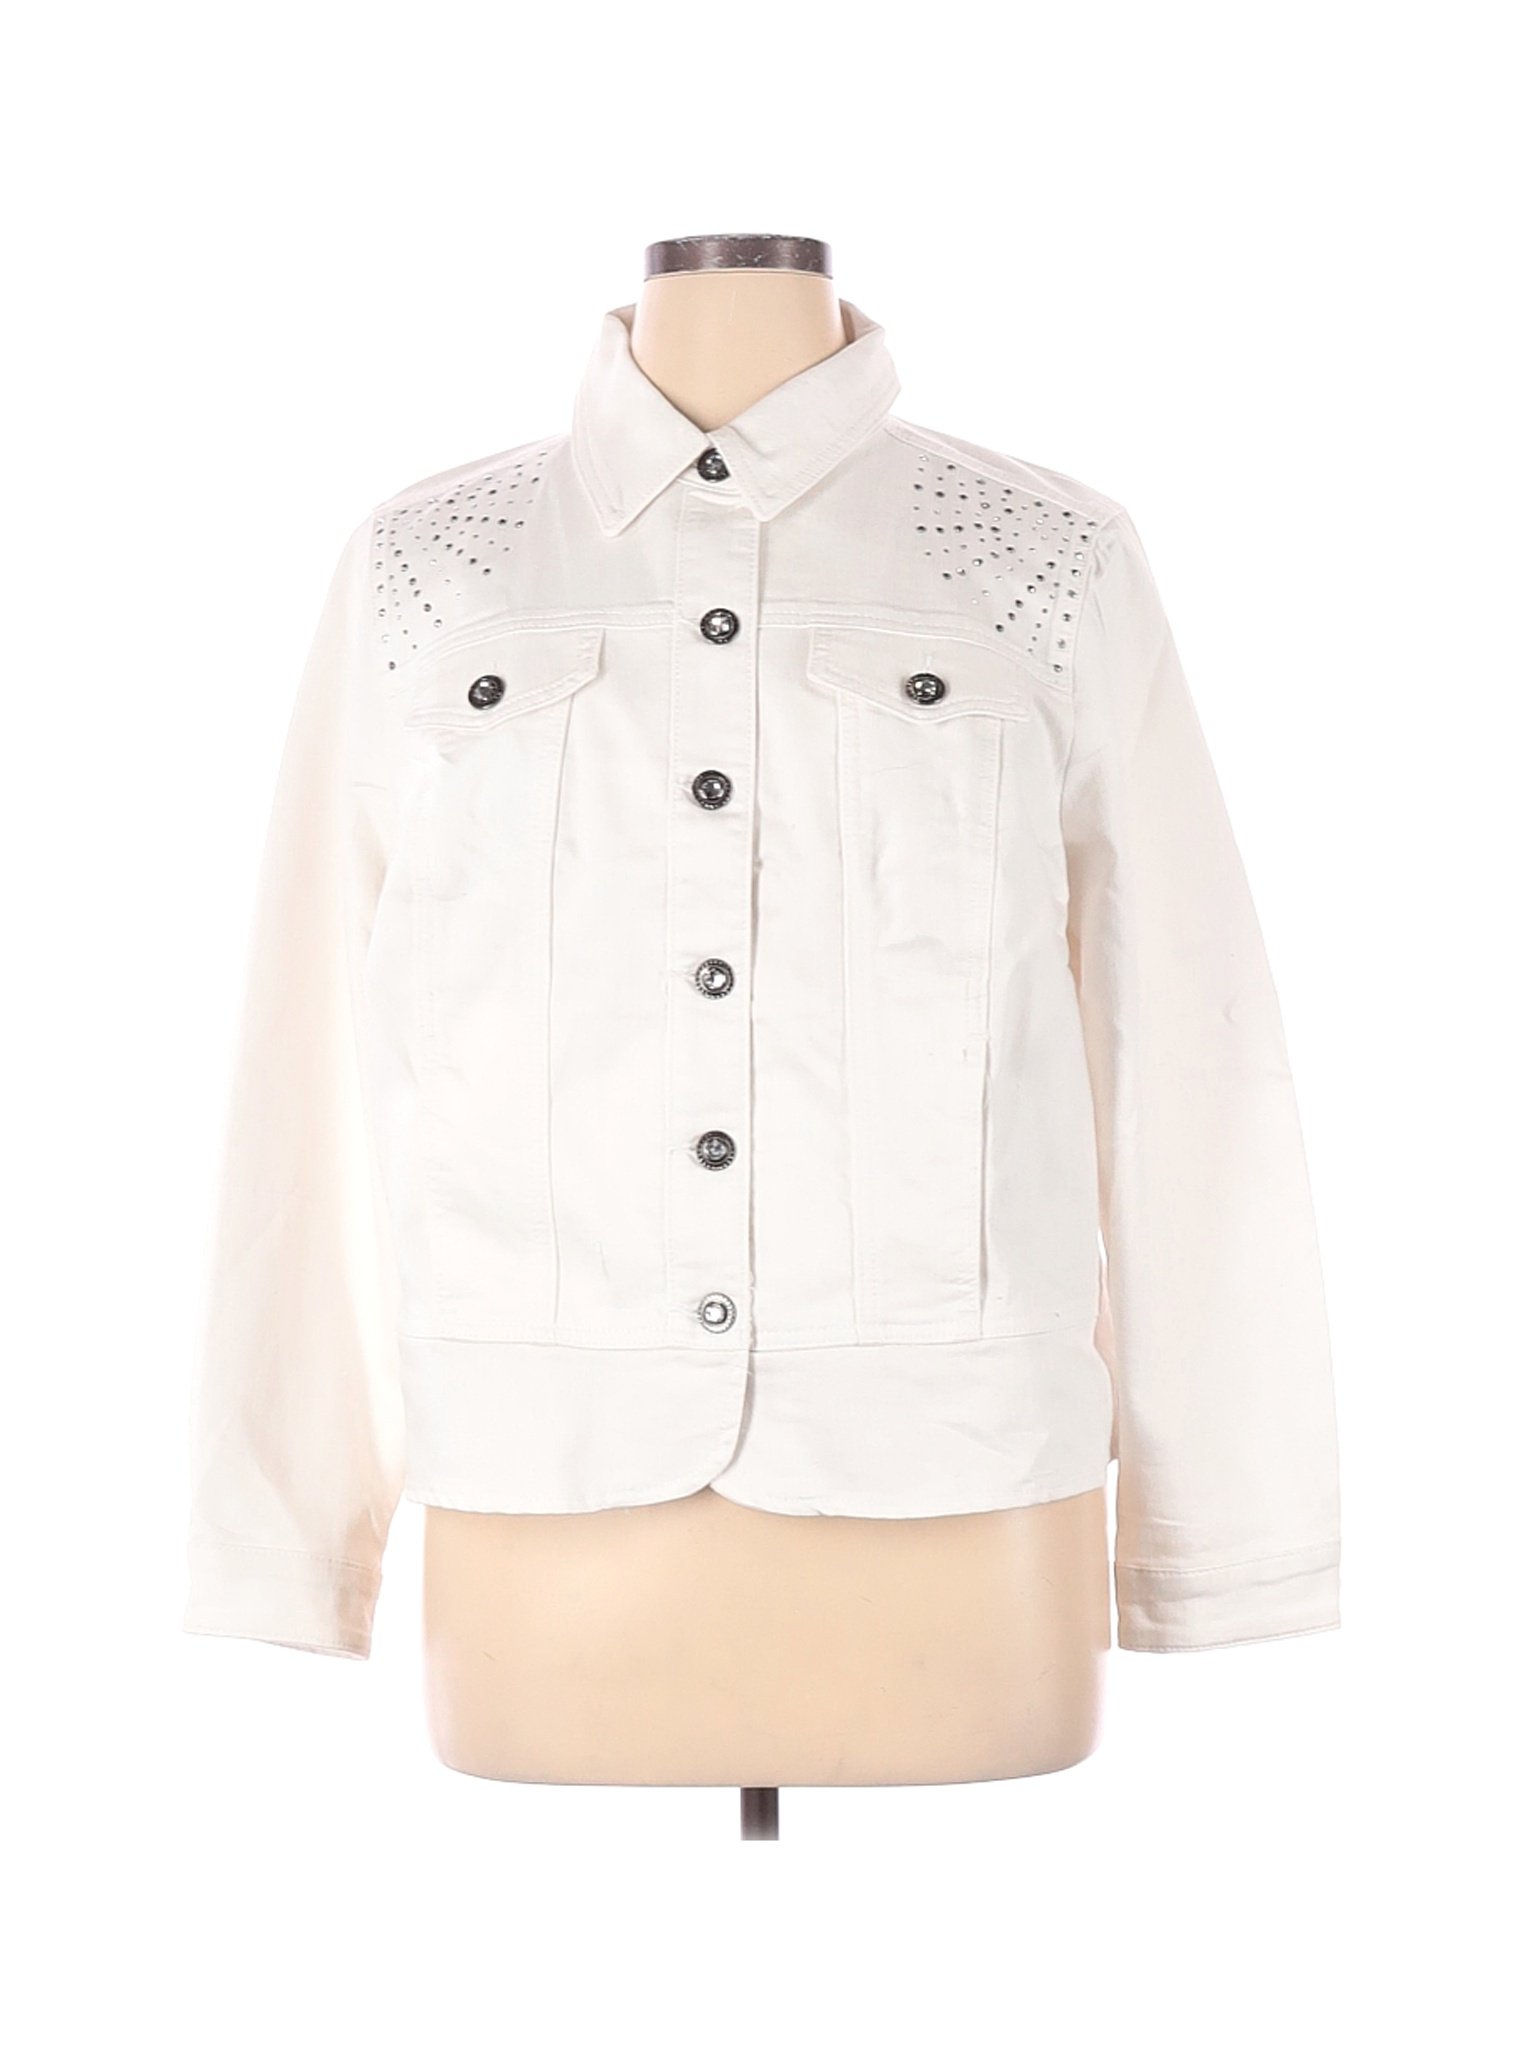 Cj Banks Women White Denim Jacket 1X Plus | eBay